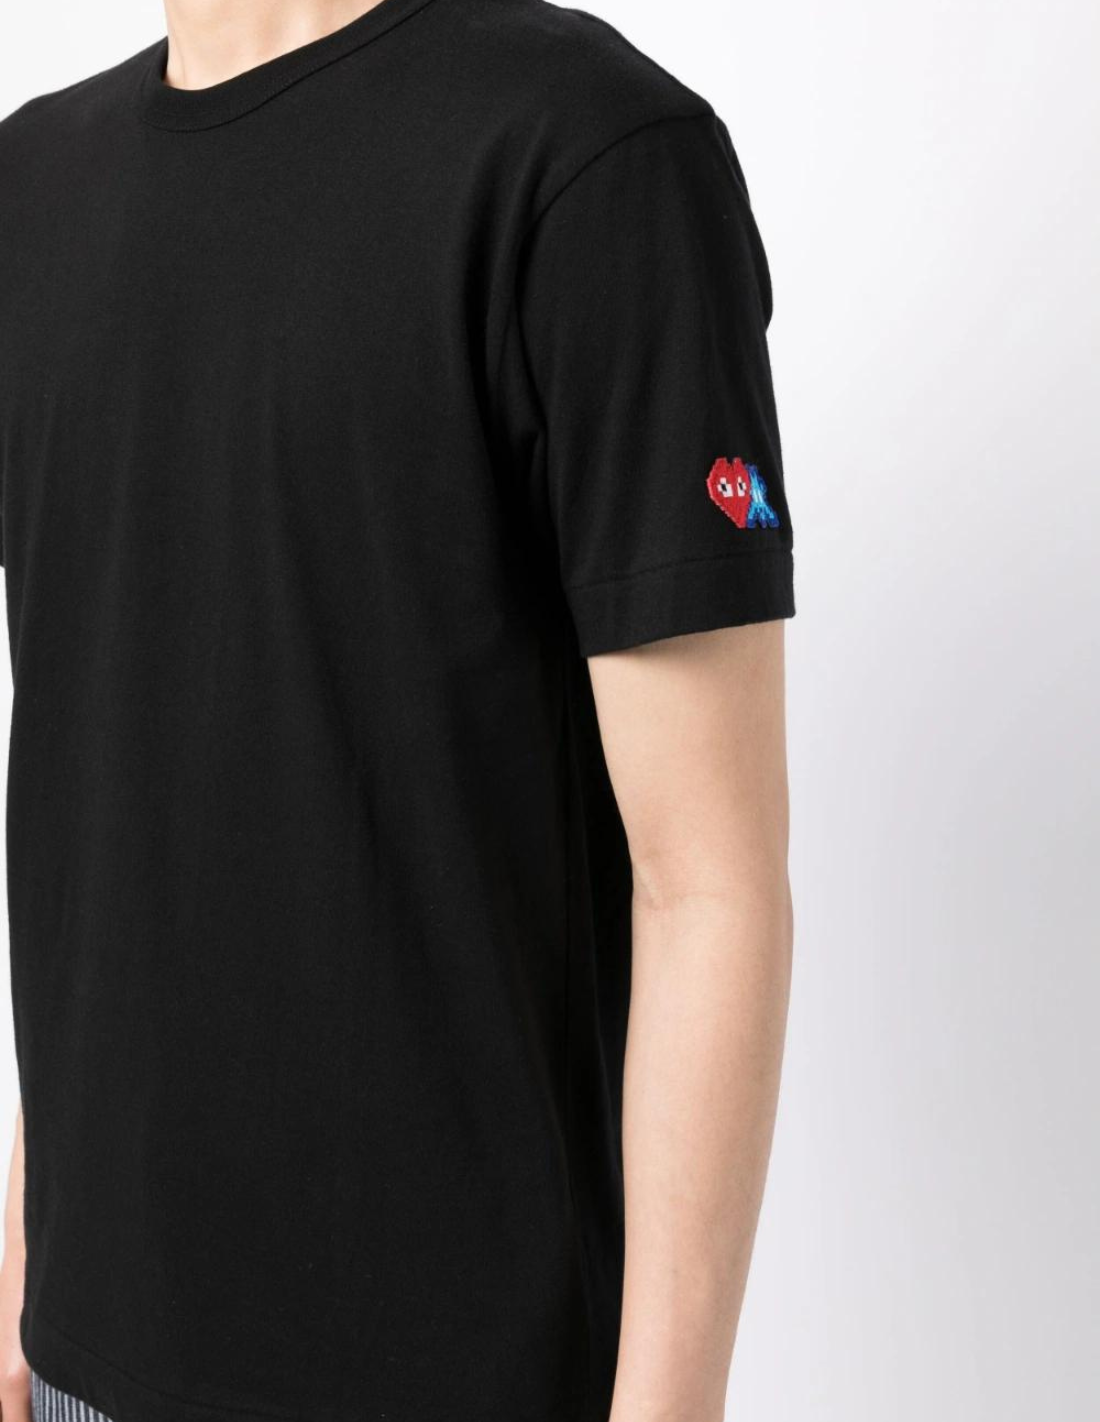 Comme des Garçons Play | Men's Navy Logo T-Shirt L